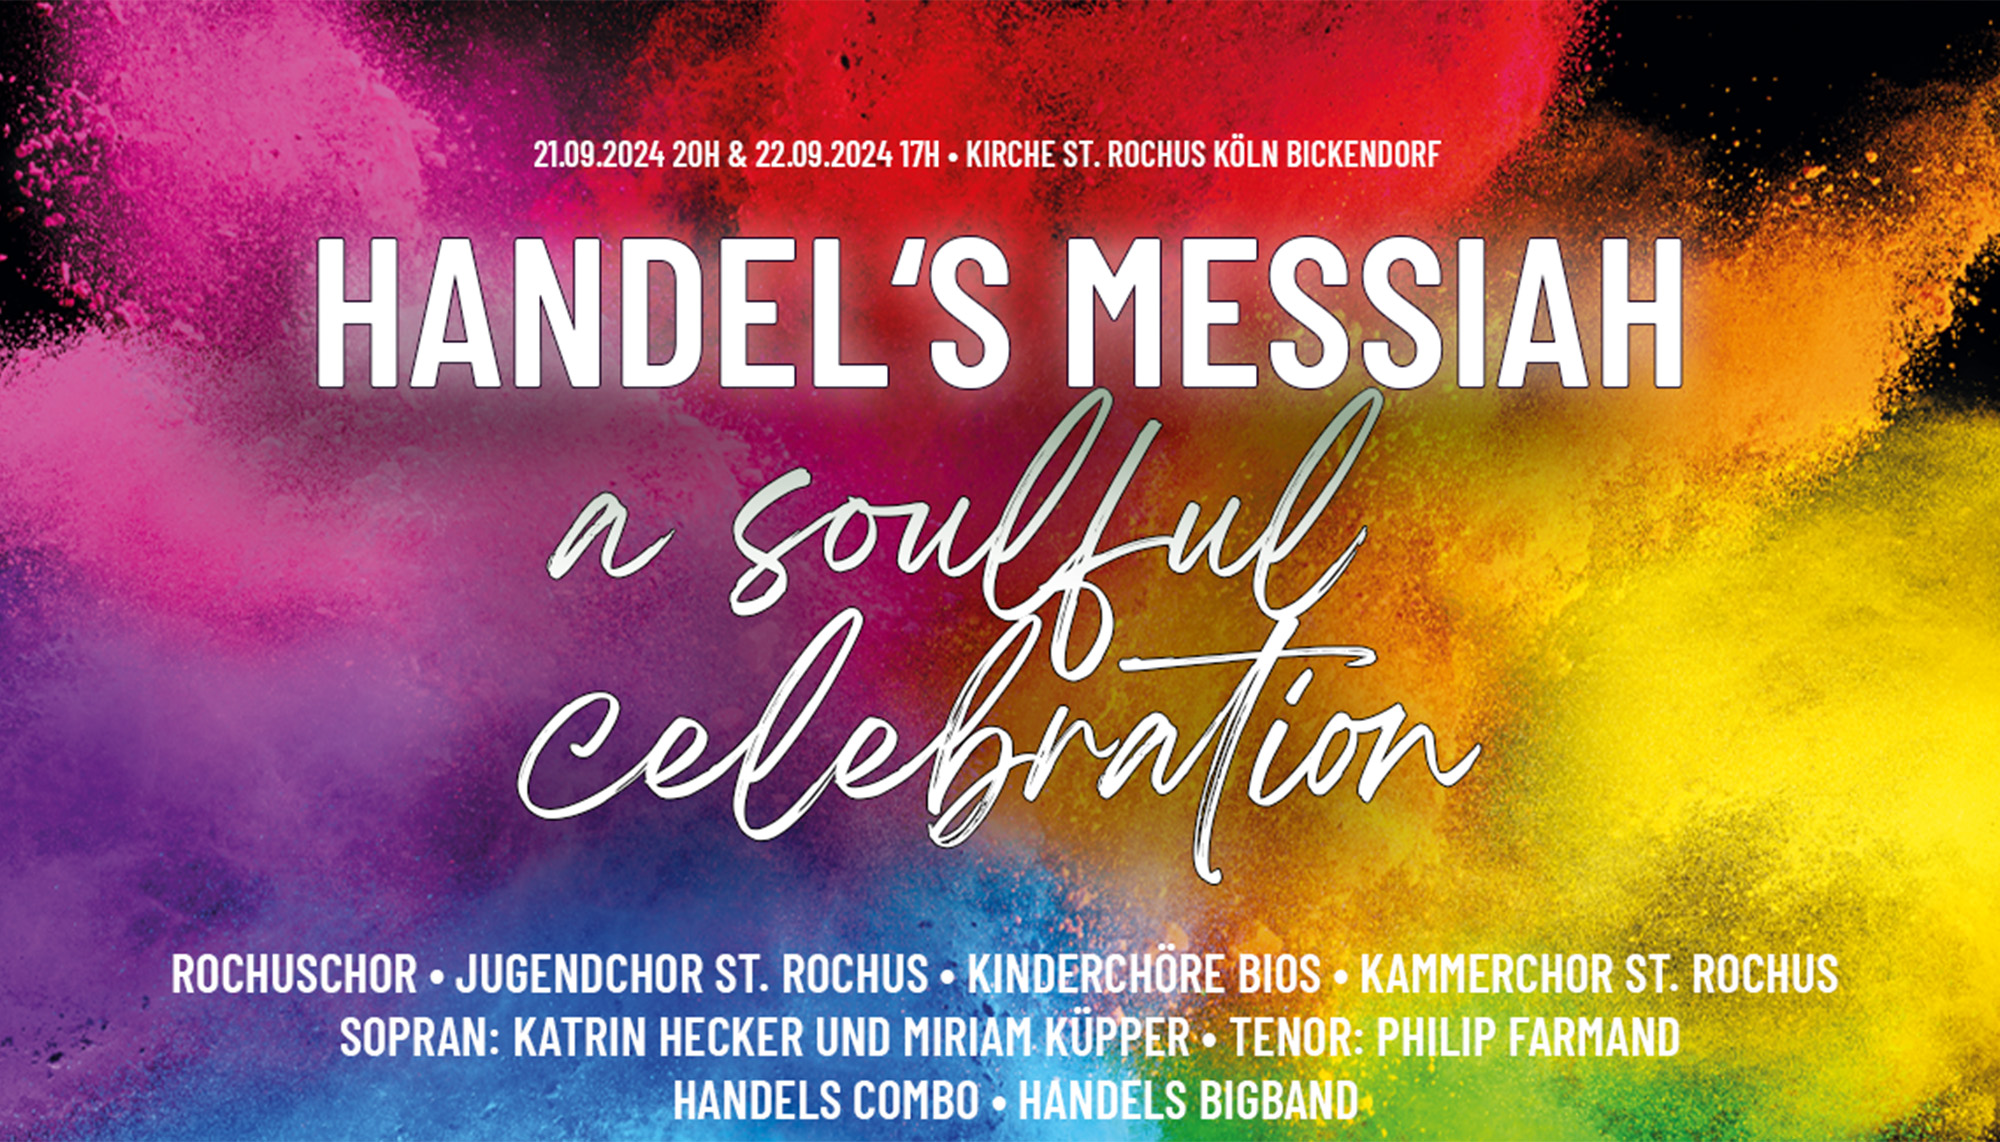 HANDEL‘S MESSIAH, a soulful celebration